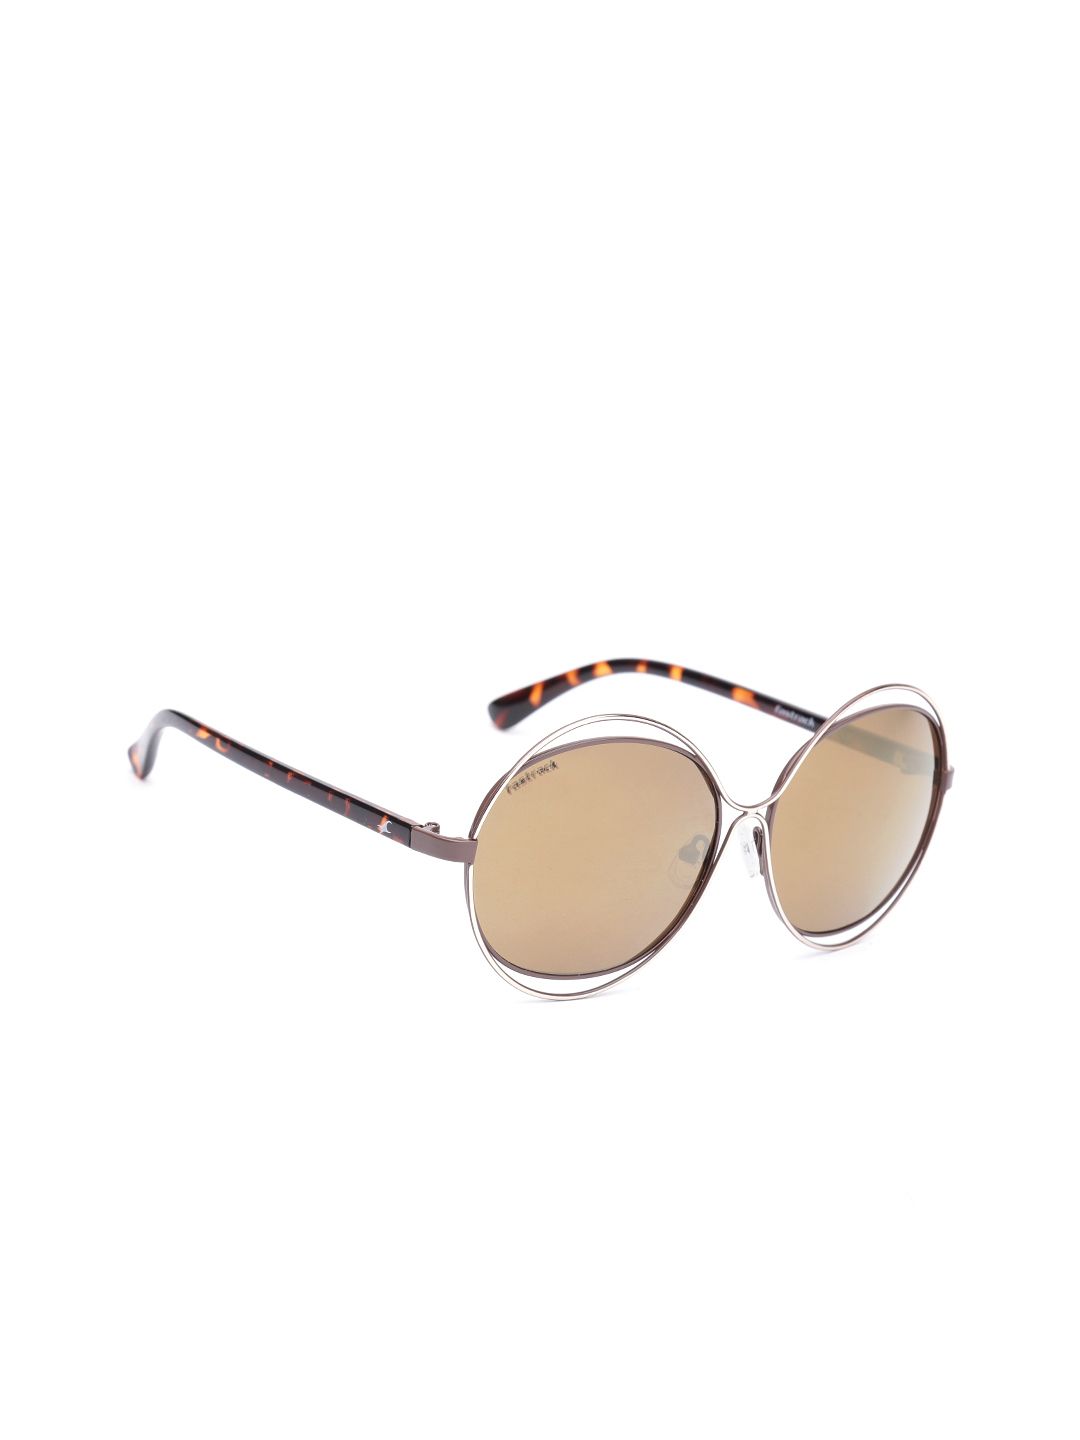 Fastrack Women Mirrored Oval Sunglasses NBC080YL3F Price in India